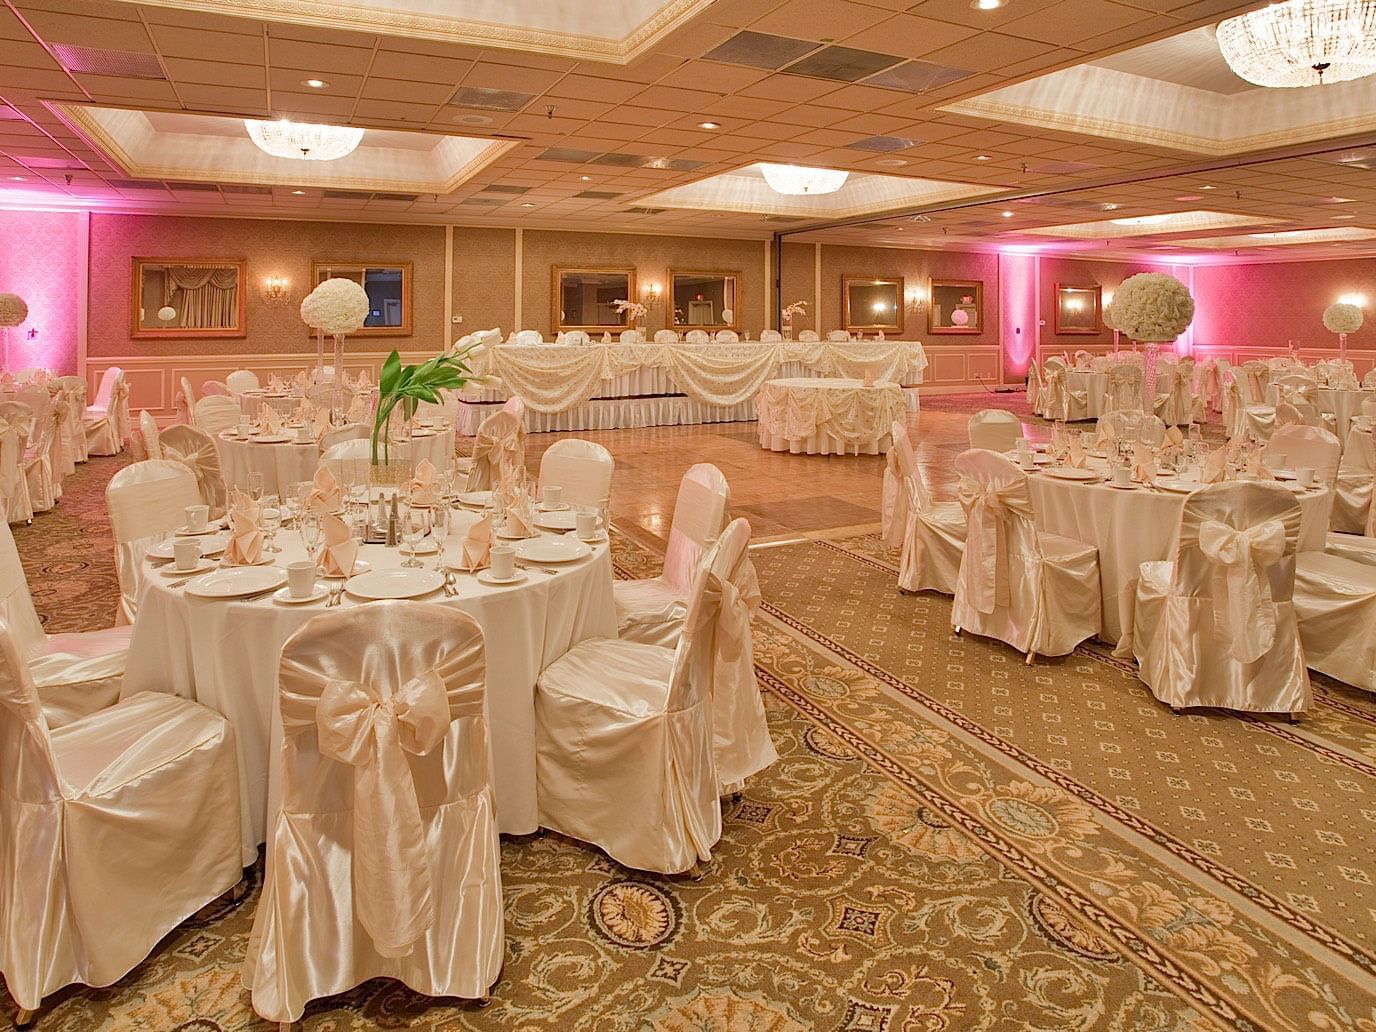 Banquet set-up in Grand ballroom at Clayton Plaza Hotel